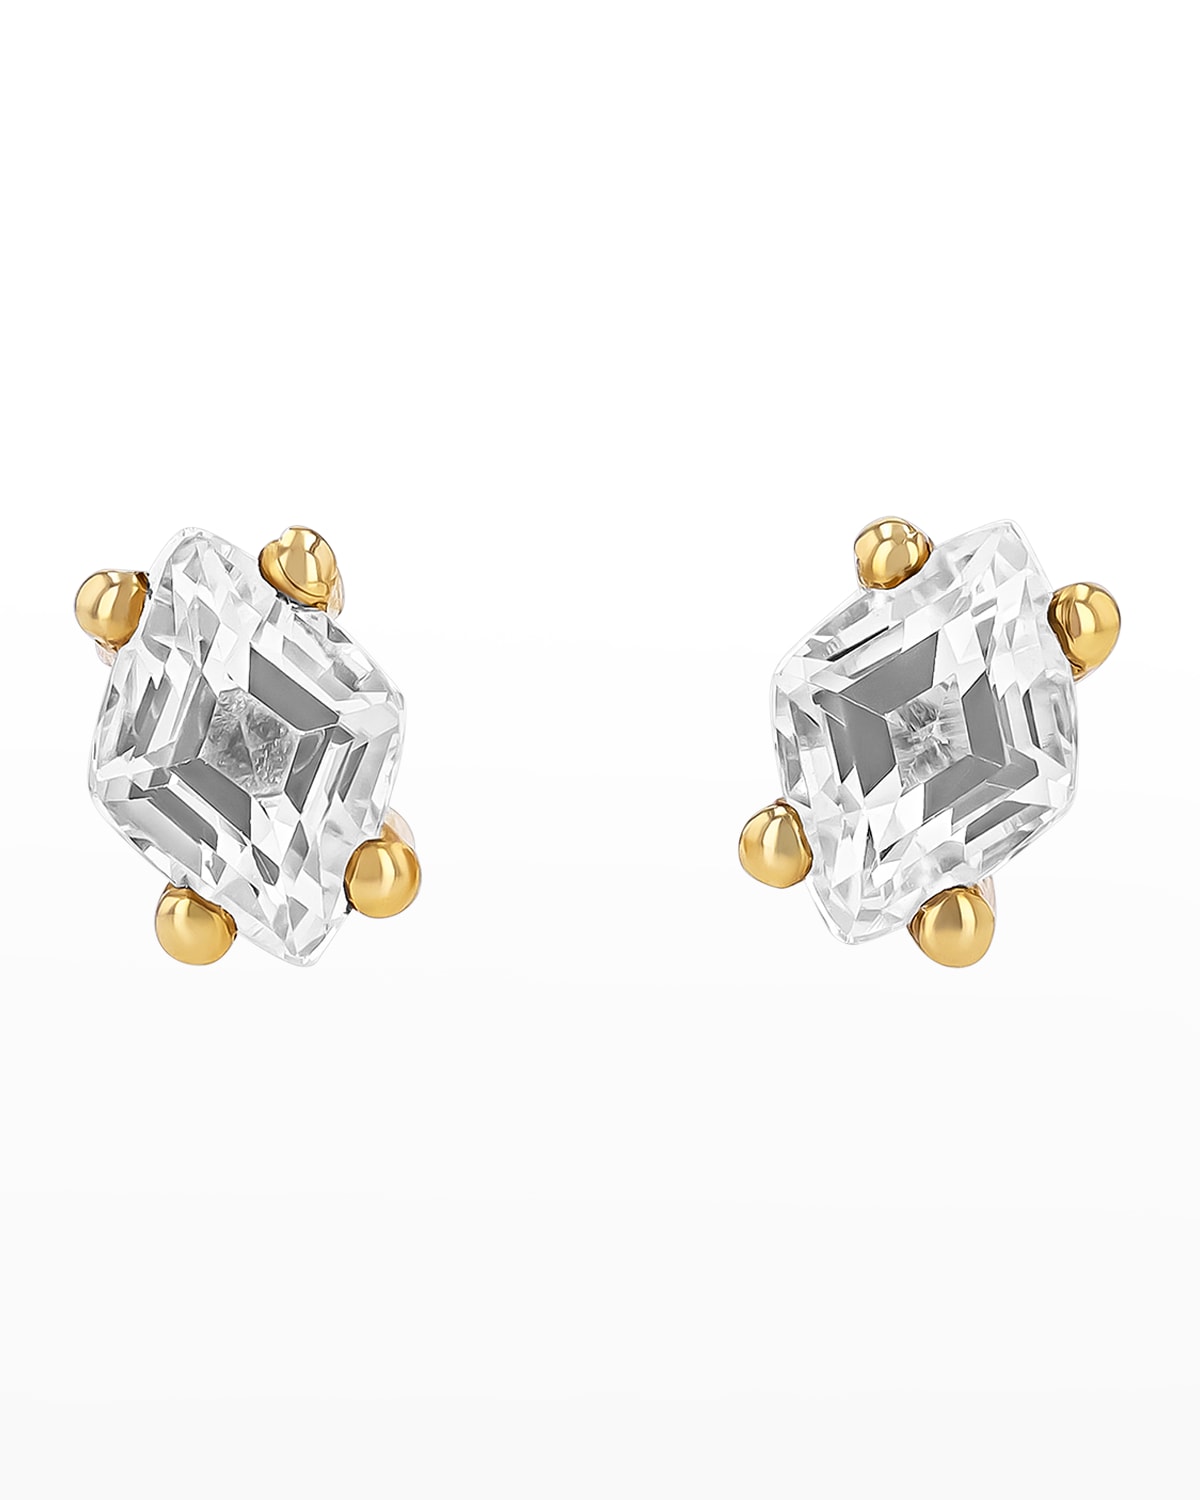 KALAN by Suzanne Kalan Diamond-Cut White Topaz Stud Earrings with Diamond Center